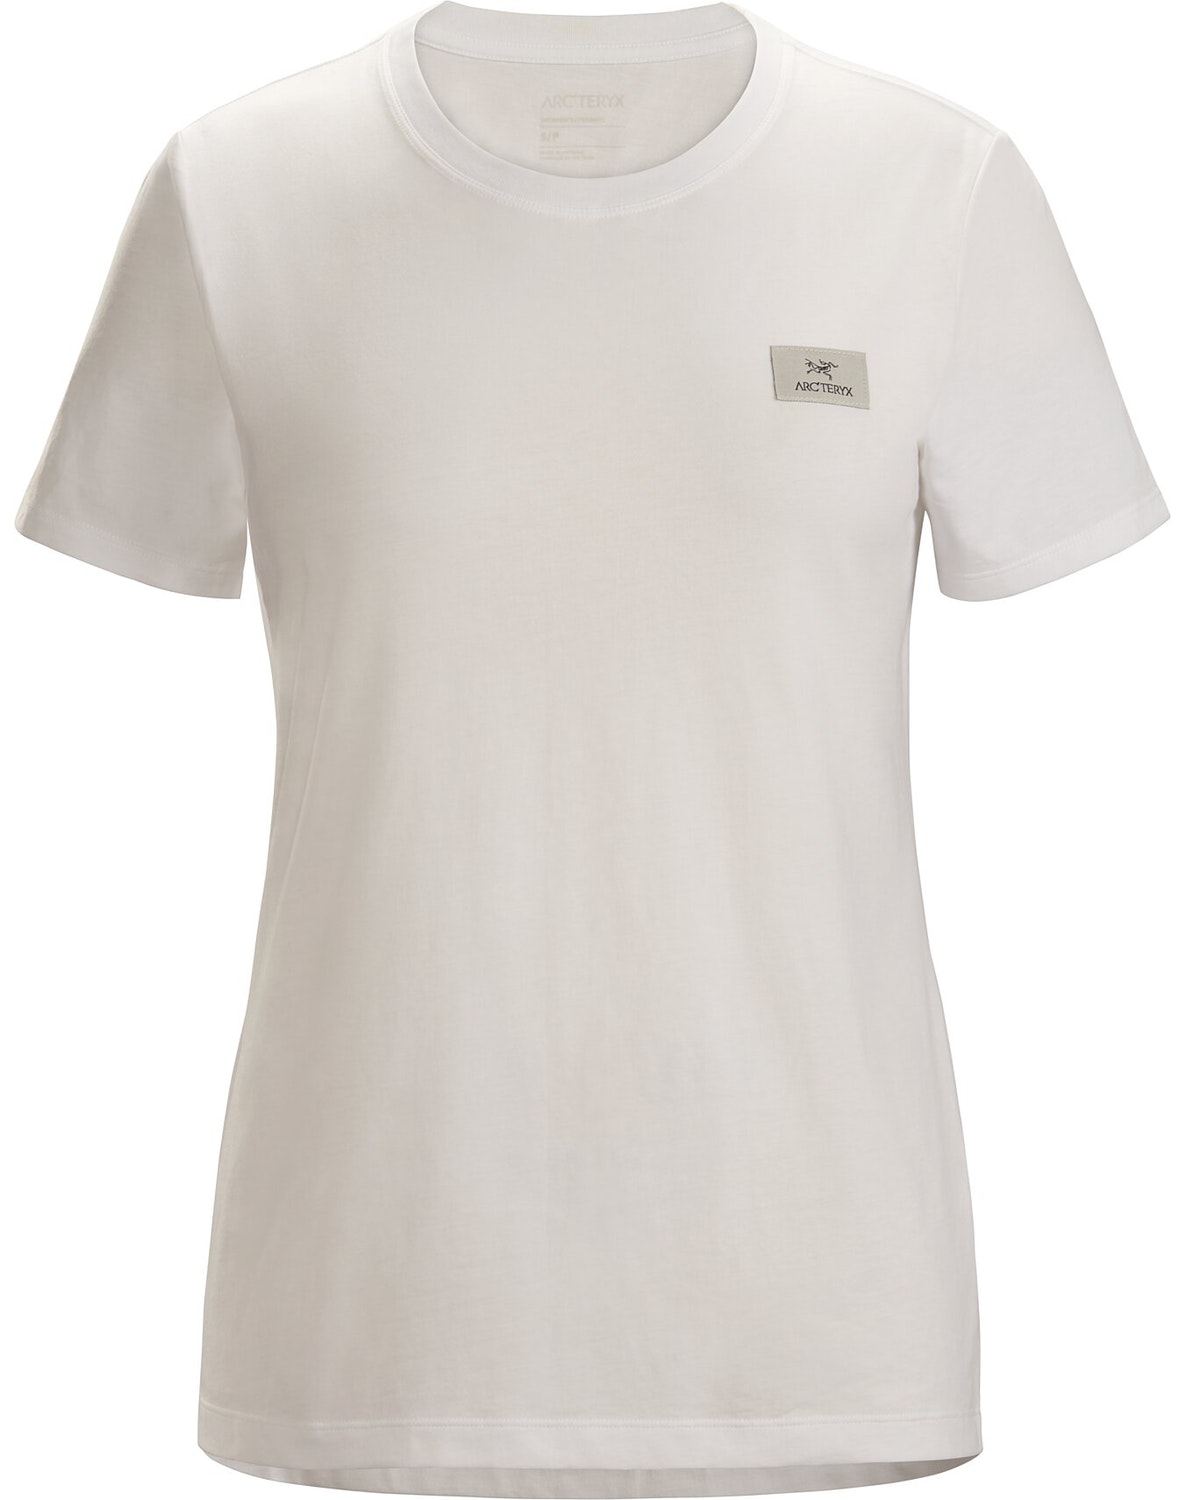 T-shirt Arc'teryx Emblem Patch Donna Bianche - IT-9351467